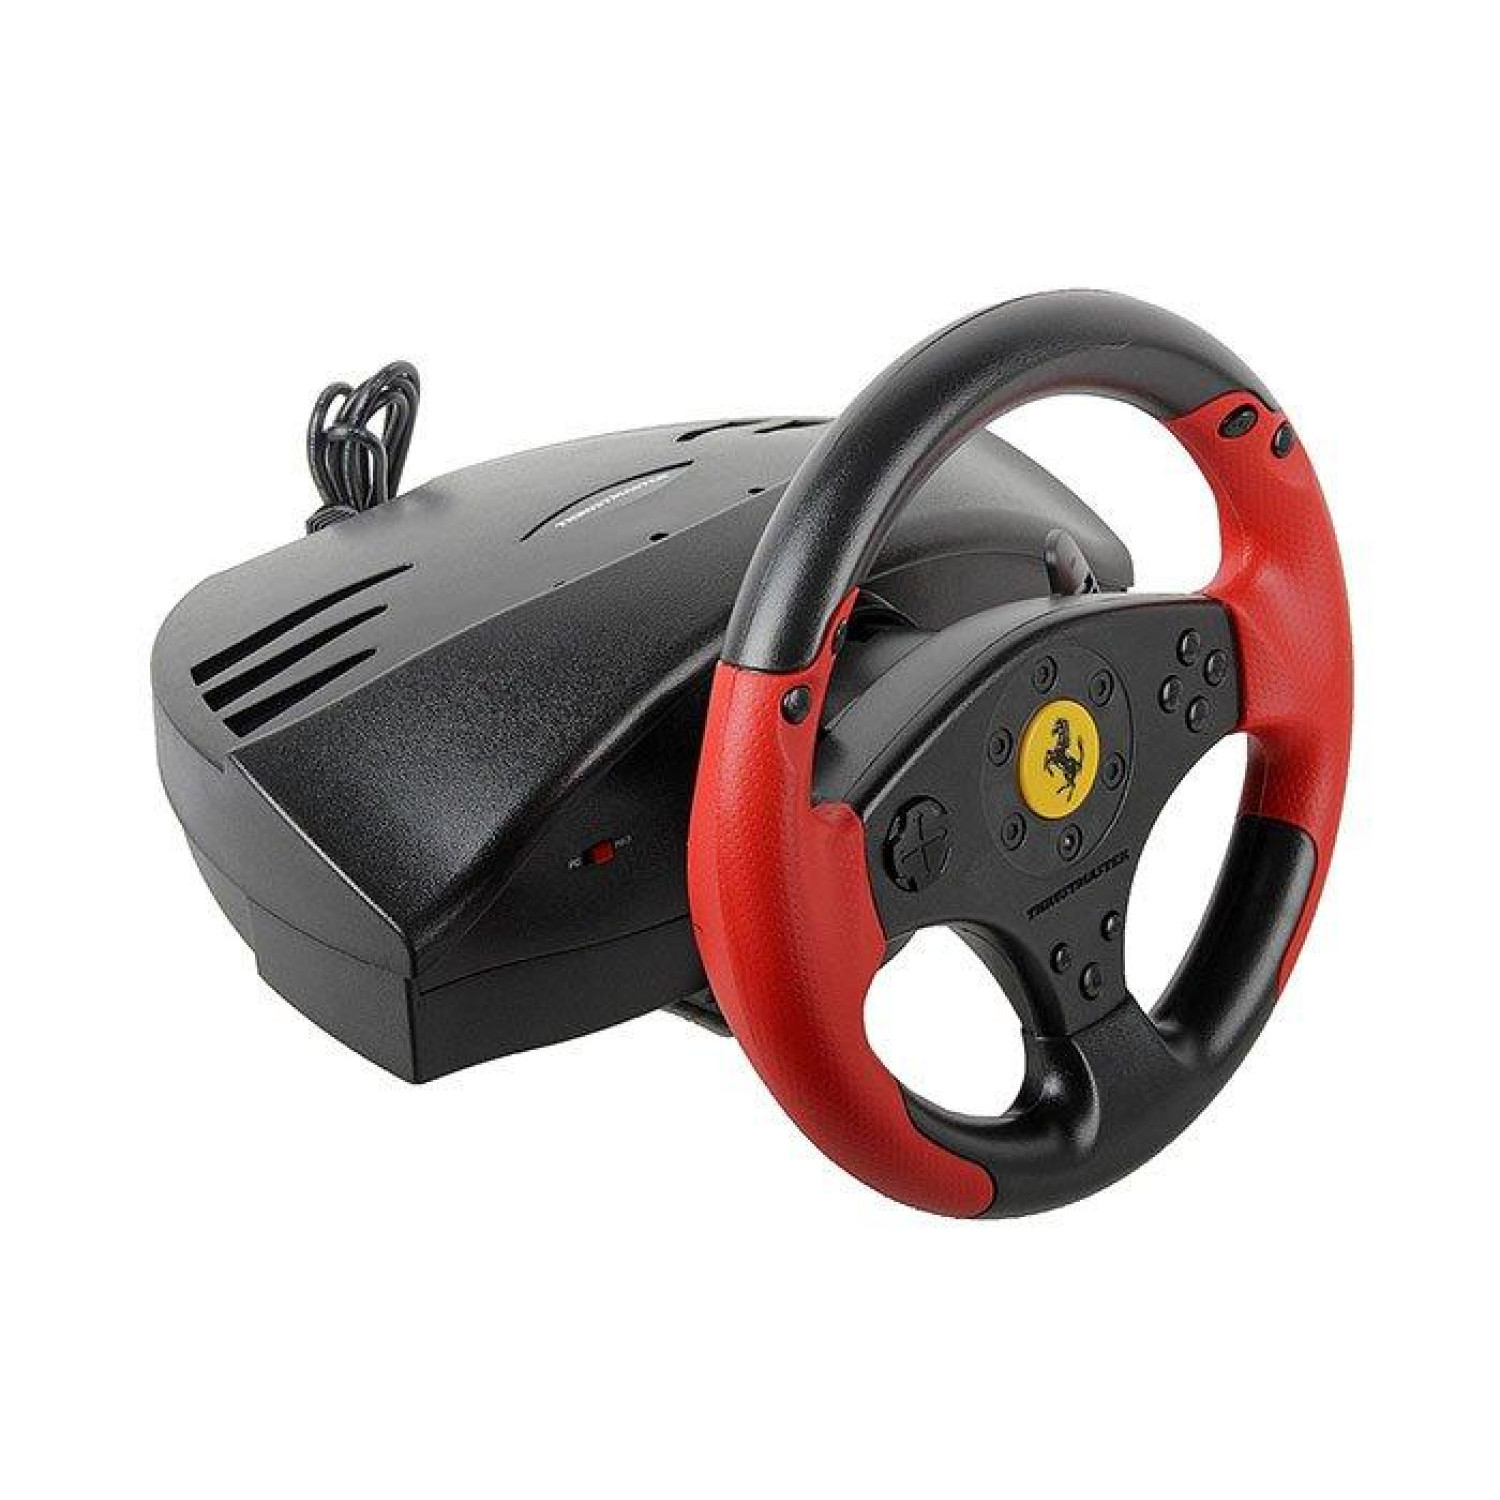 Волан THRUSTMASTER Ferrari Red Legend Edition PS3/PC, Черен/Червен